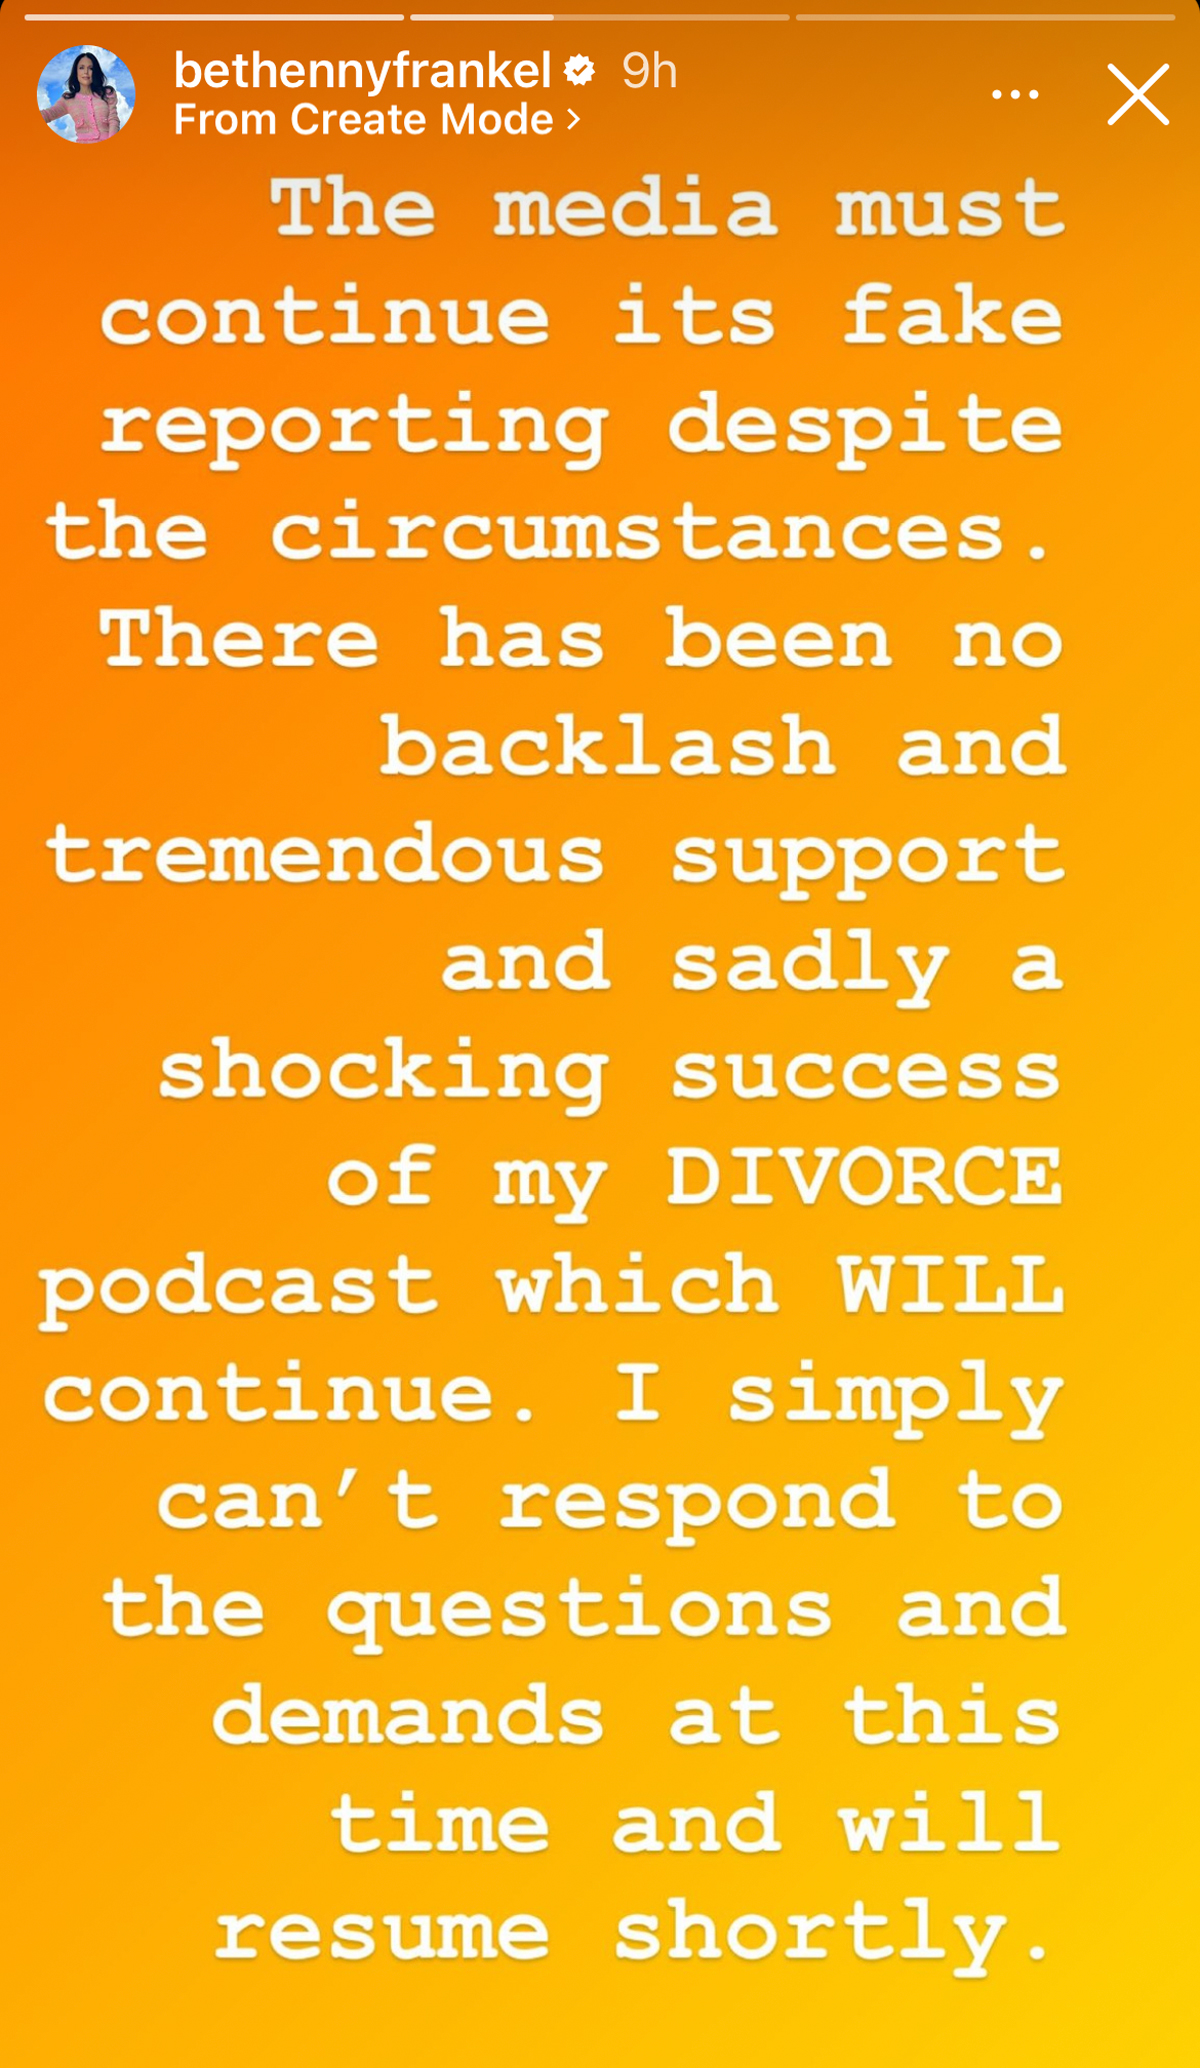 Bethenny Frankel Already Paused Her Divorce Podcast